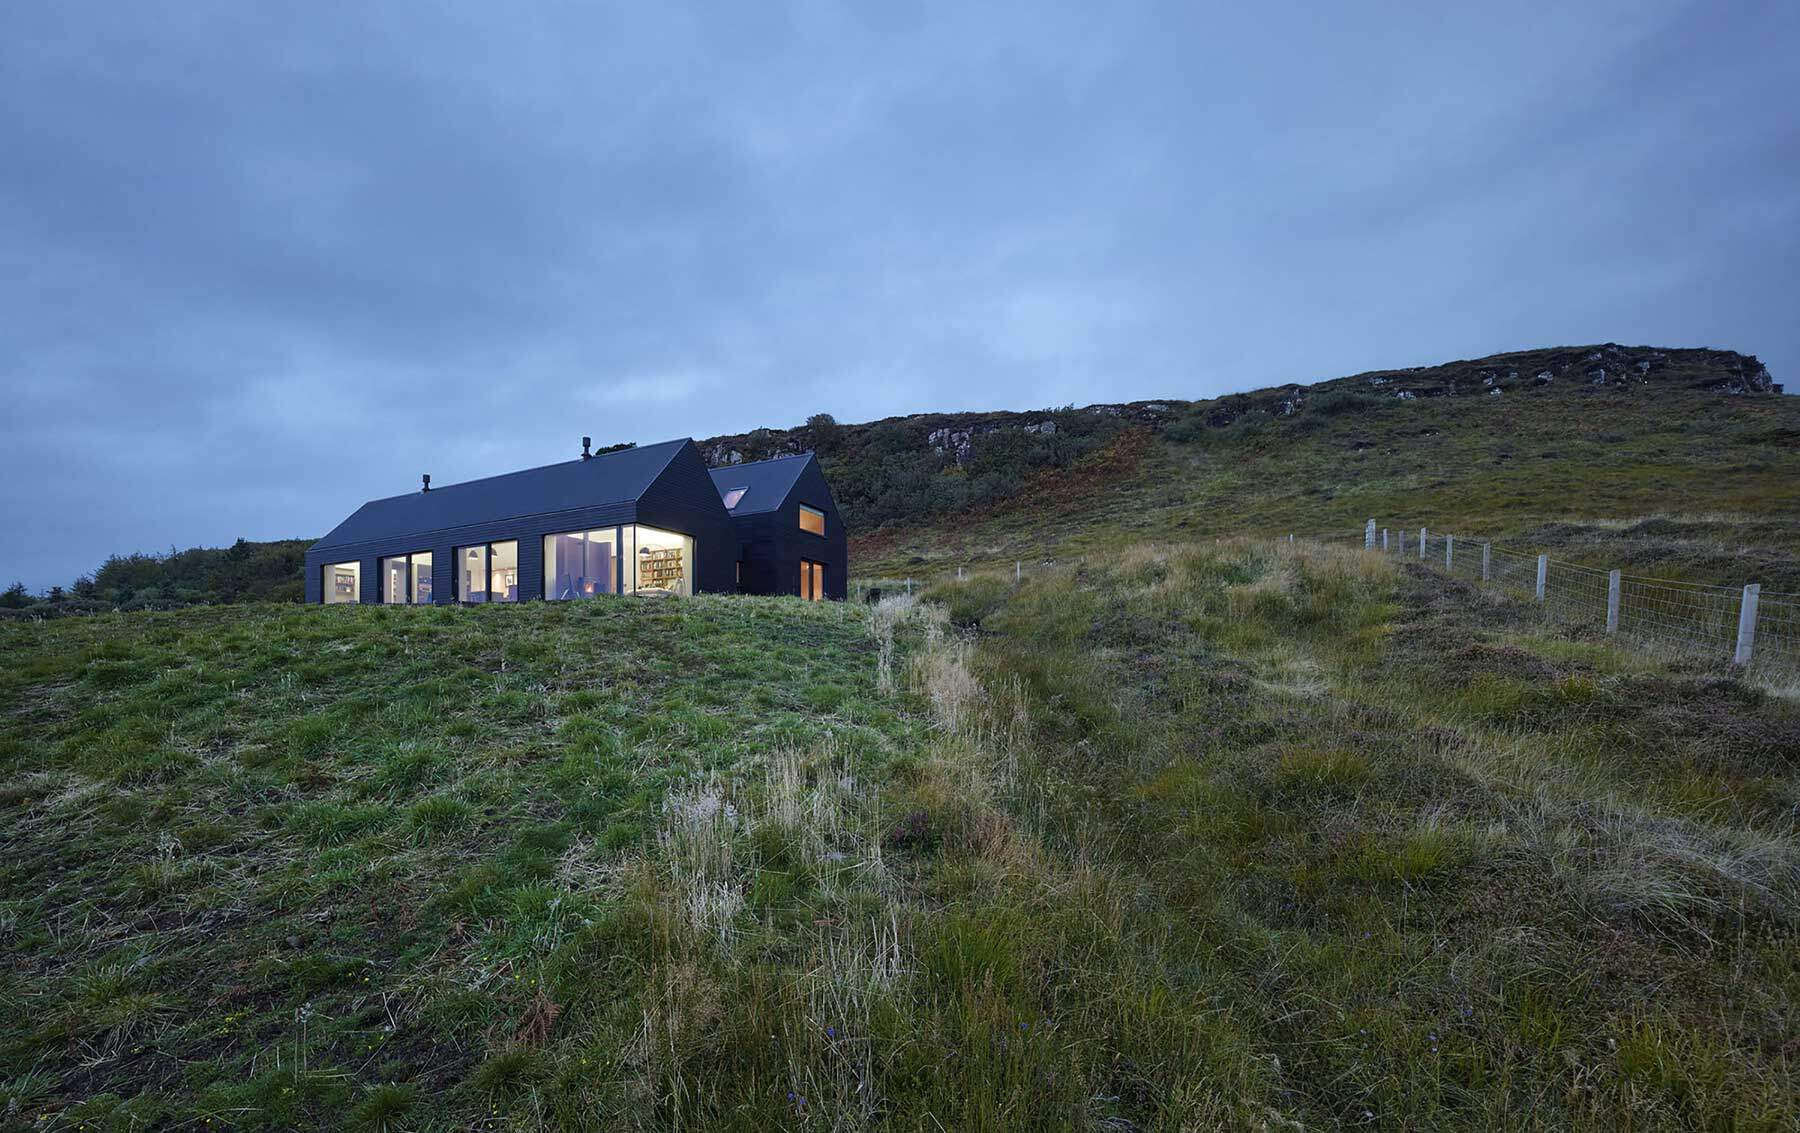 Skye Isle house inspired by Scottish farm barns - HomeWorldDesign (12)